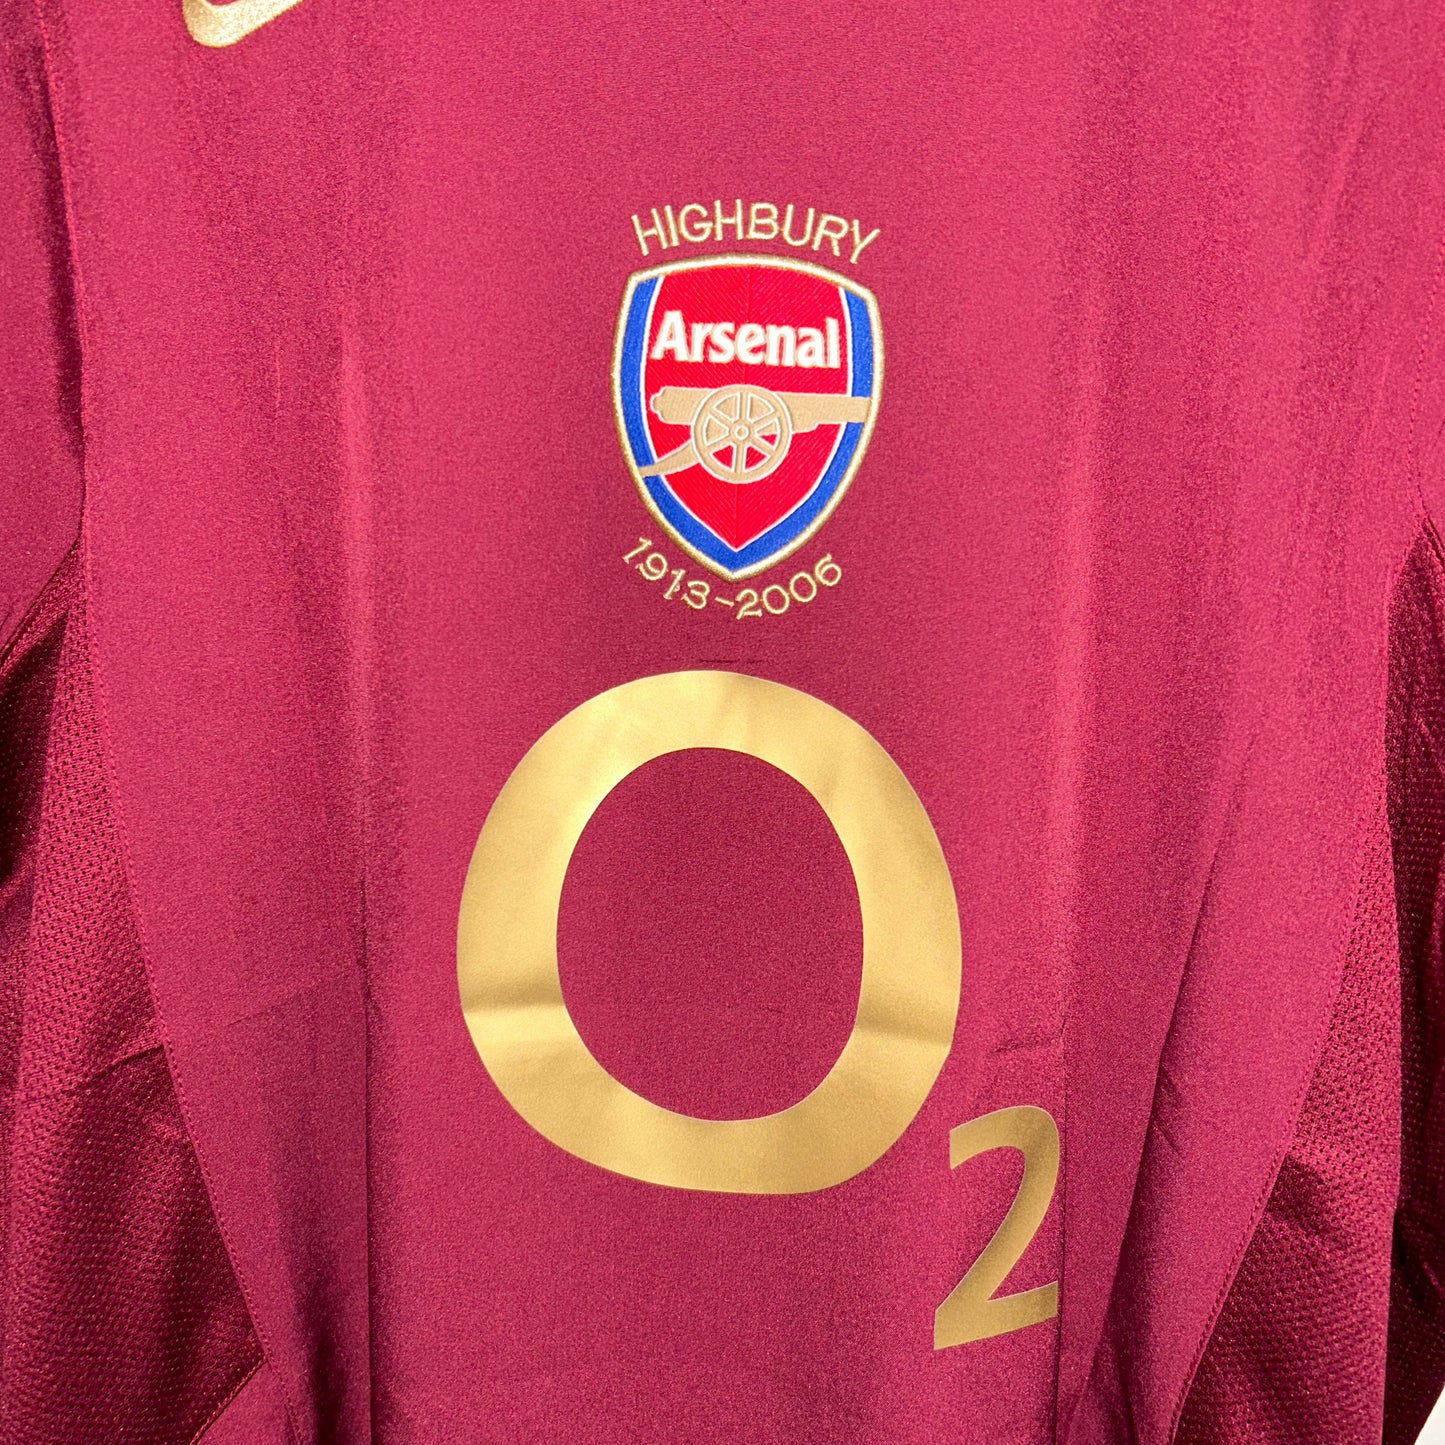 Arsenal 2005/06 Highbury Commemoration Home Shirt